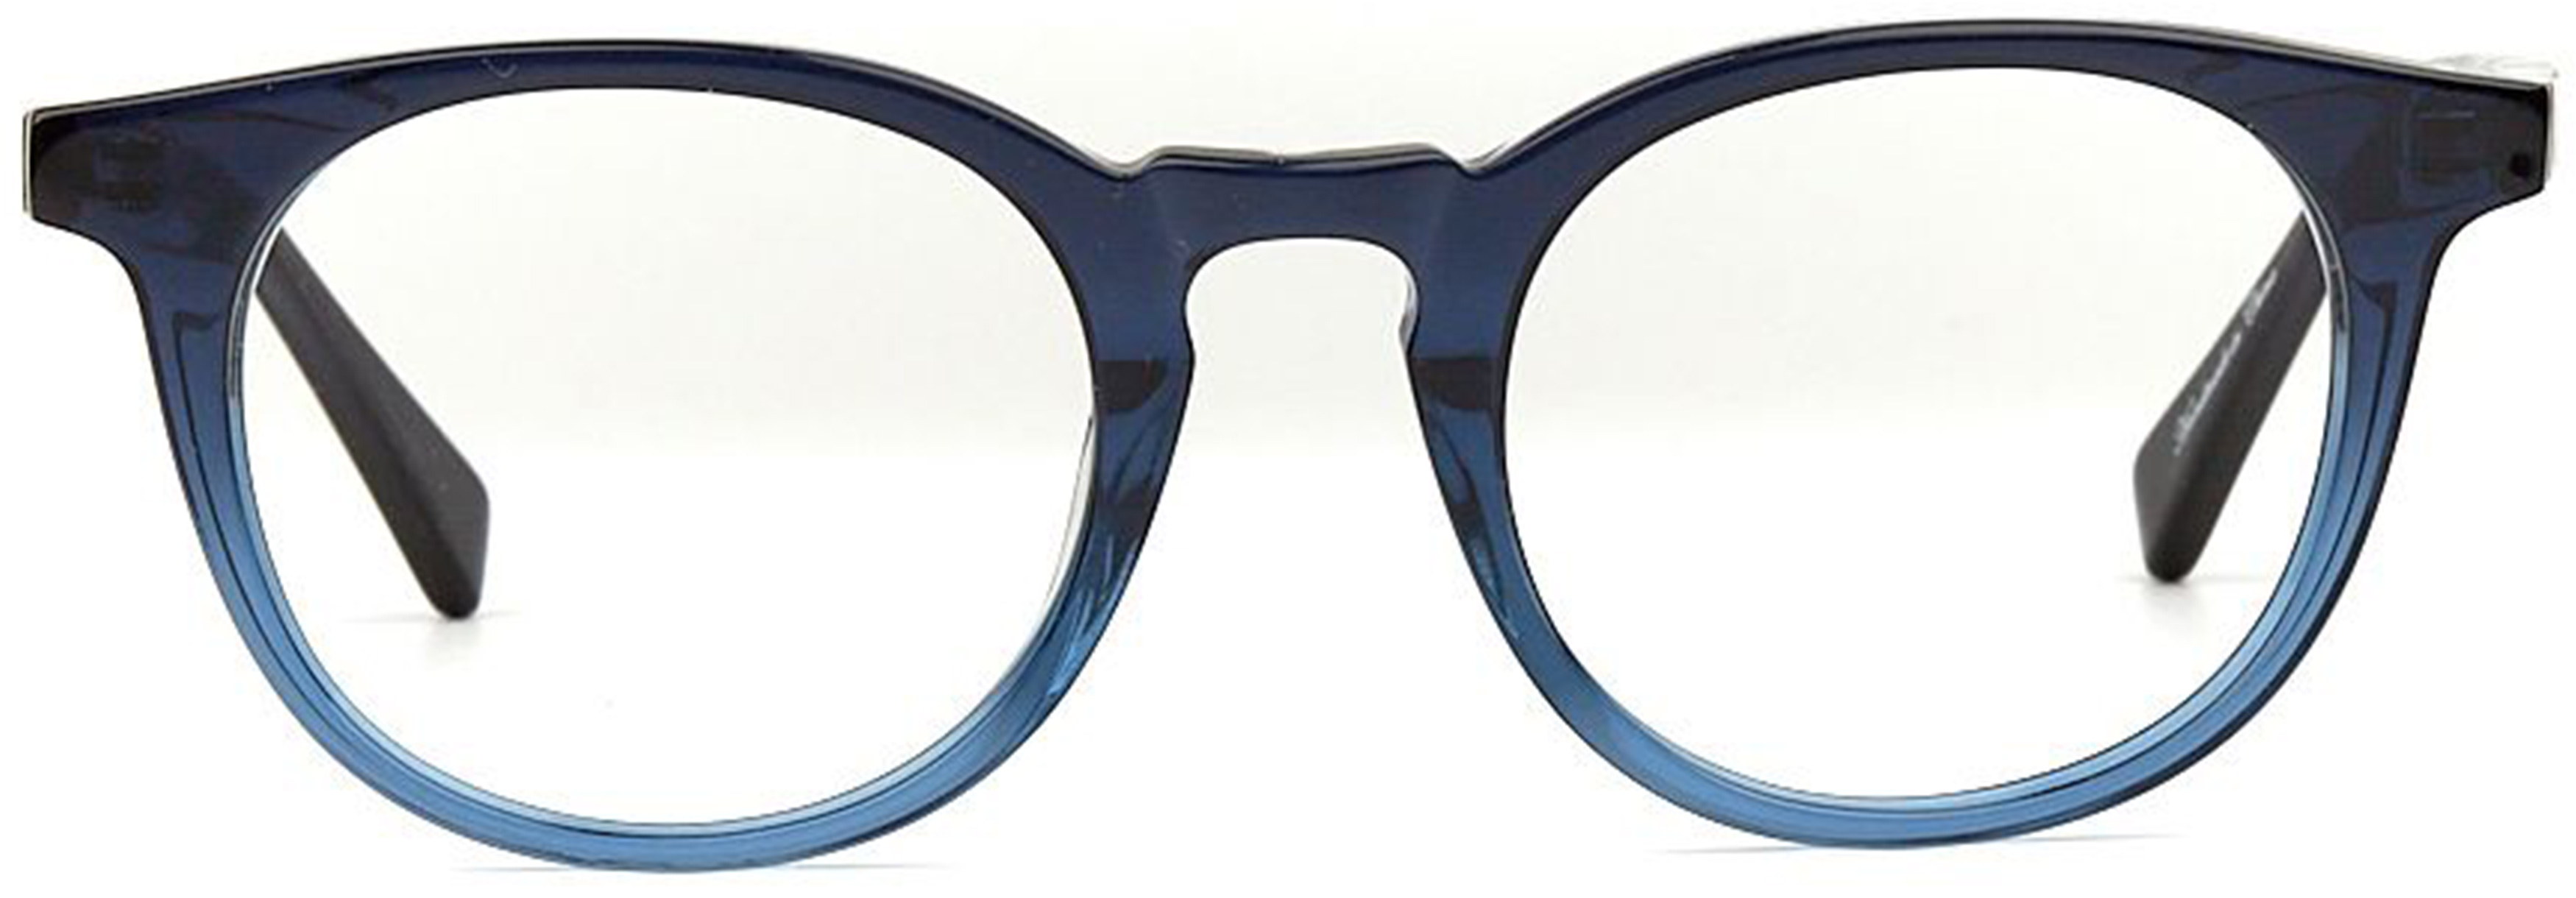 Webster Prescription Eyeglasses in for | Classic Specs